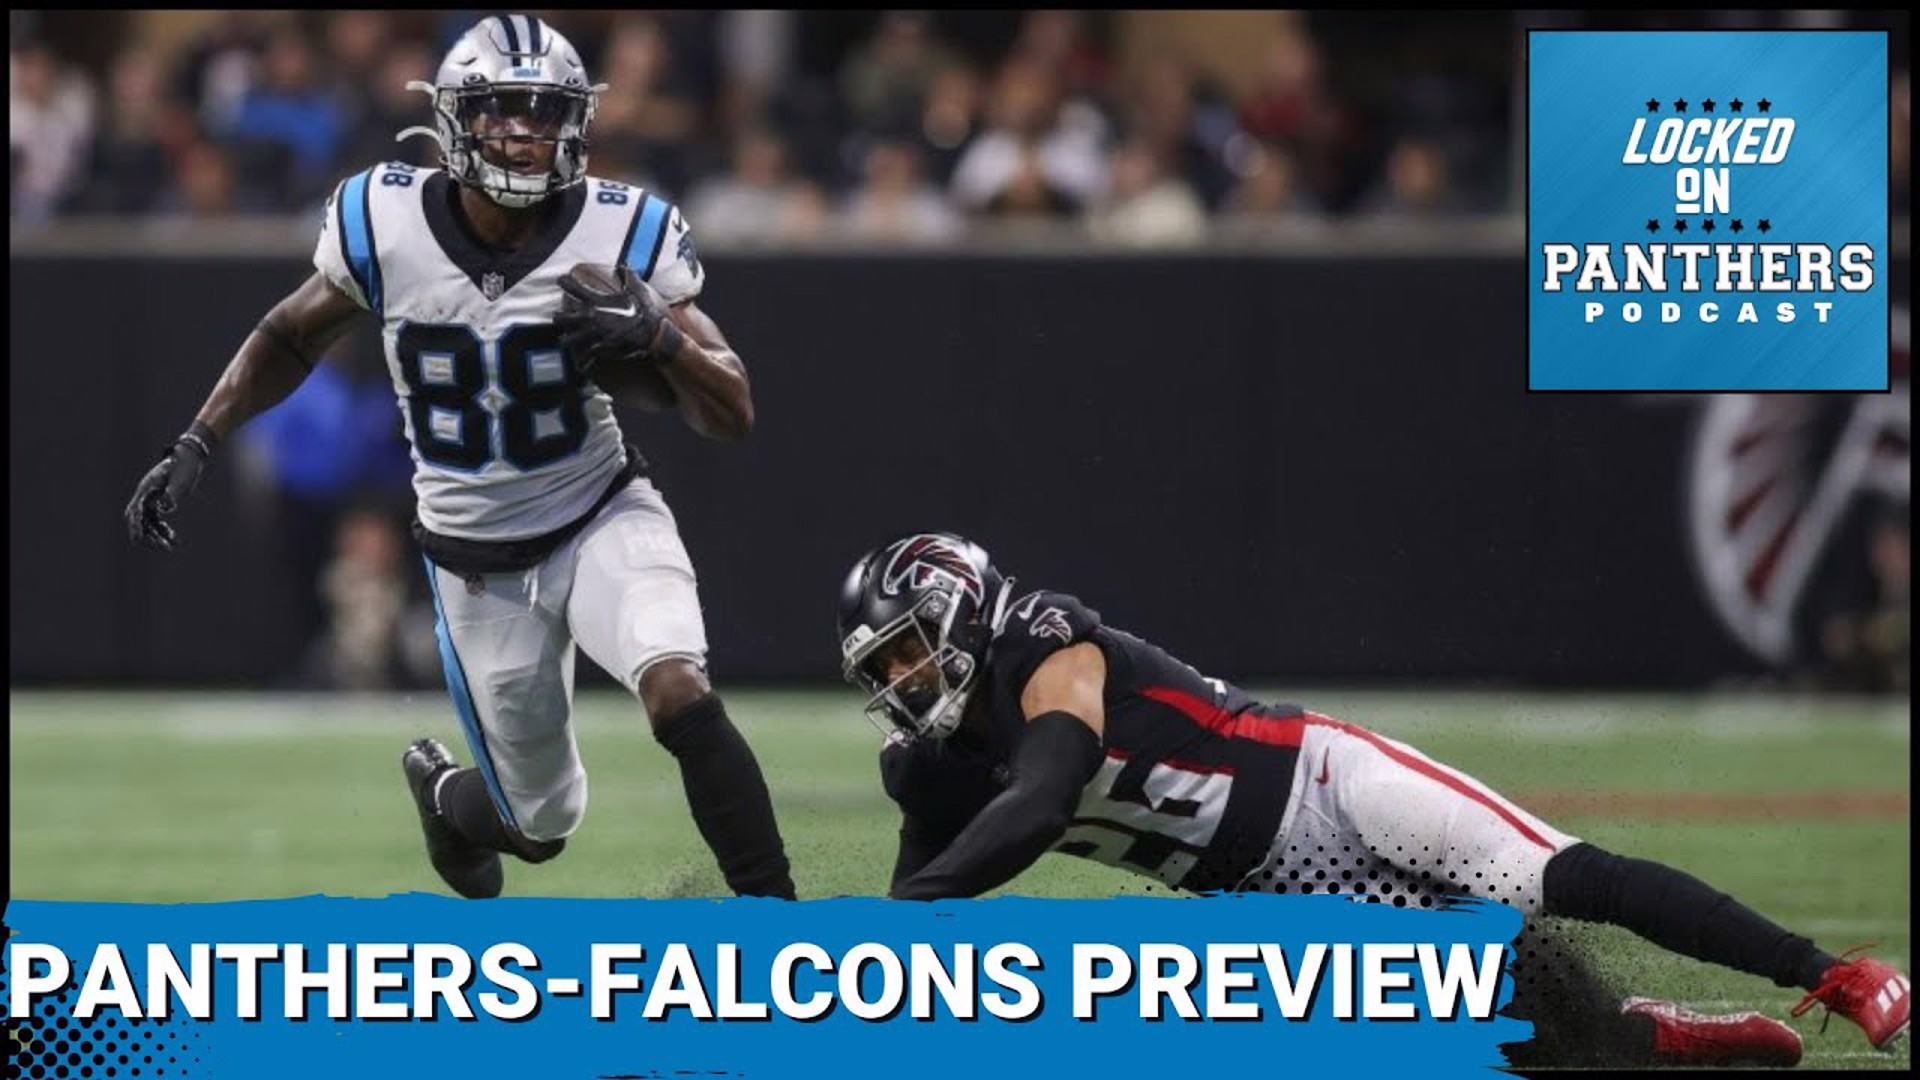 Carolina Panthers vs. Atlanta Falcons Week 10 Preview, Locked on Panthers